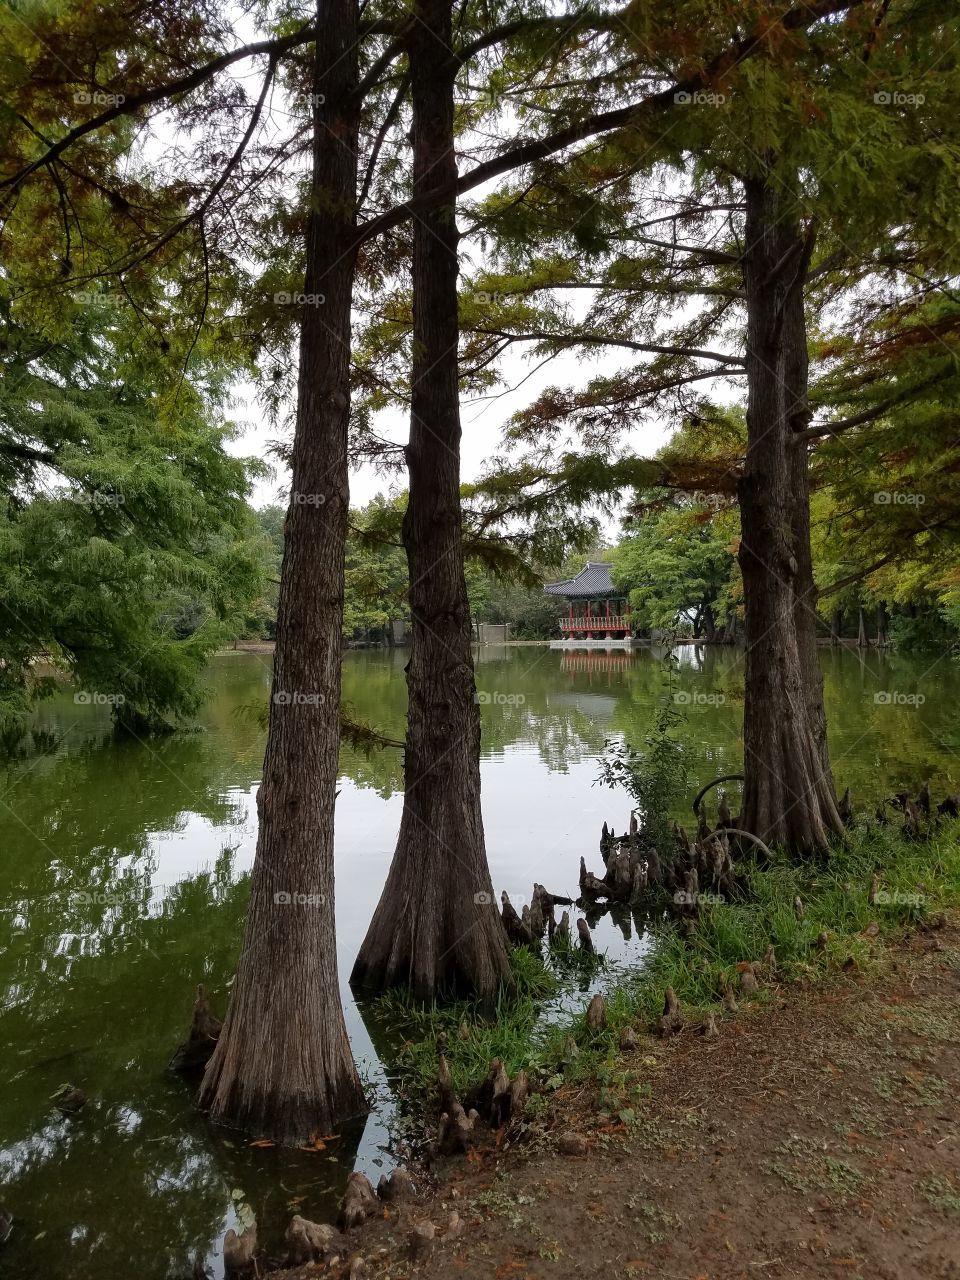 Trees and a lake